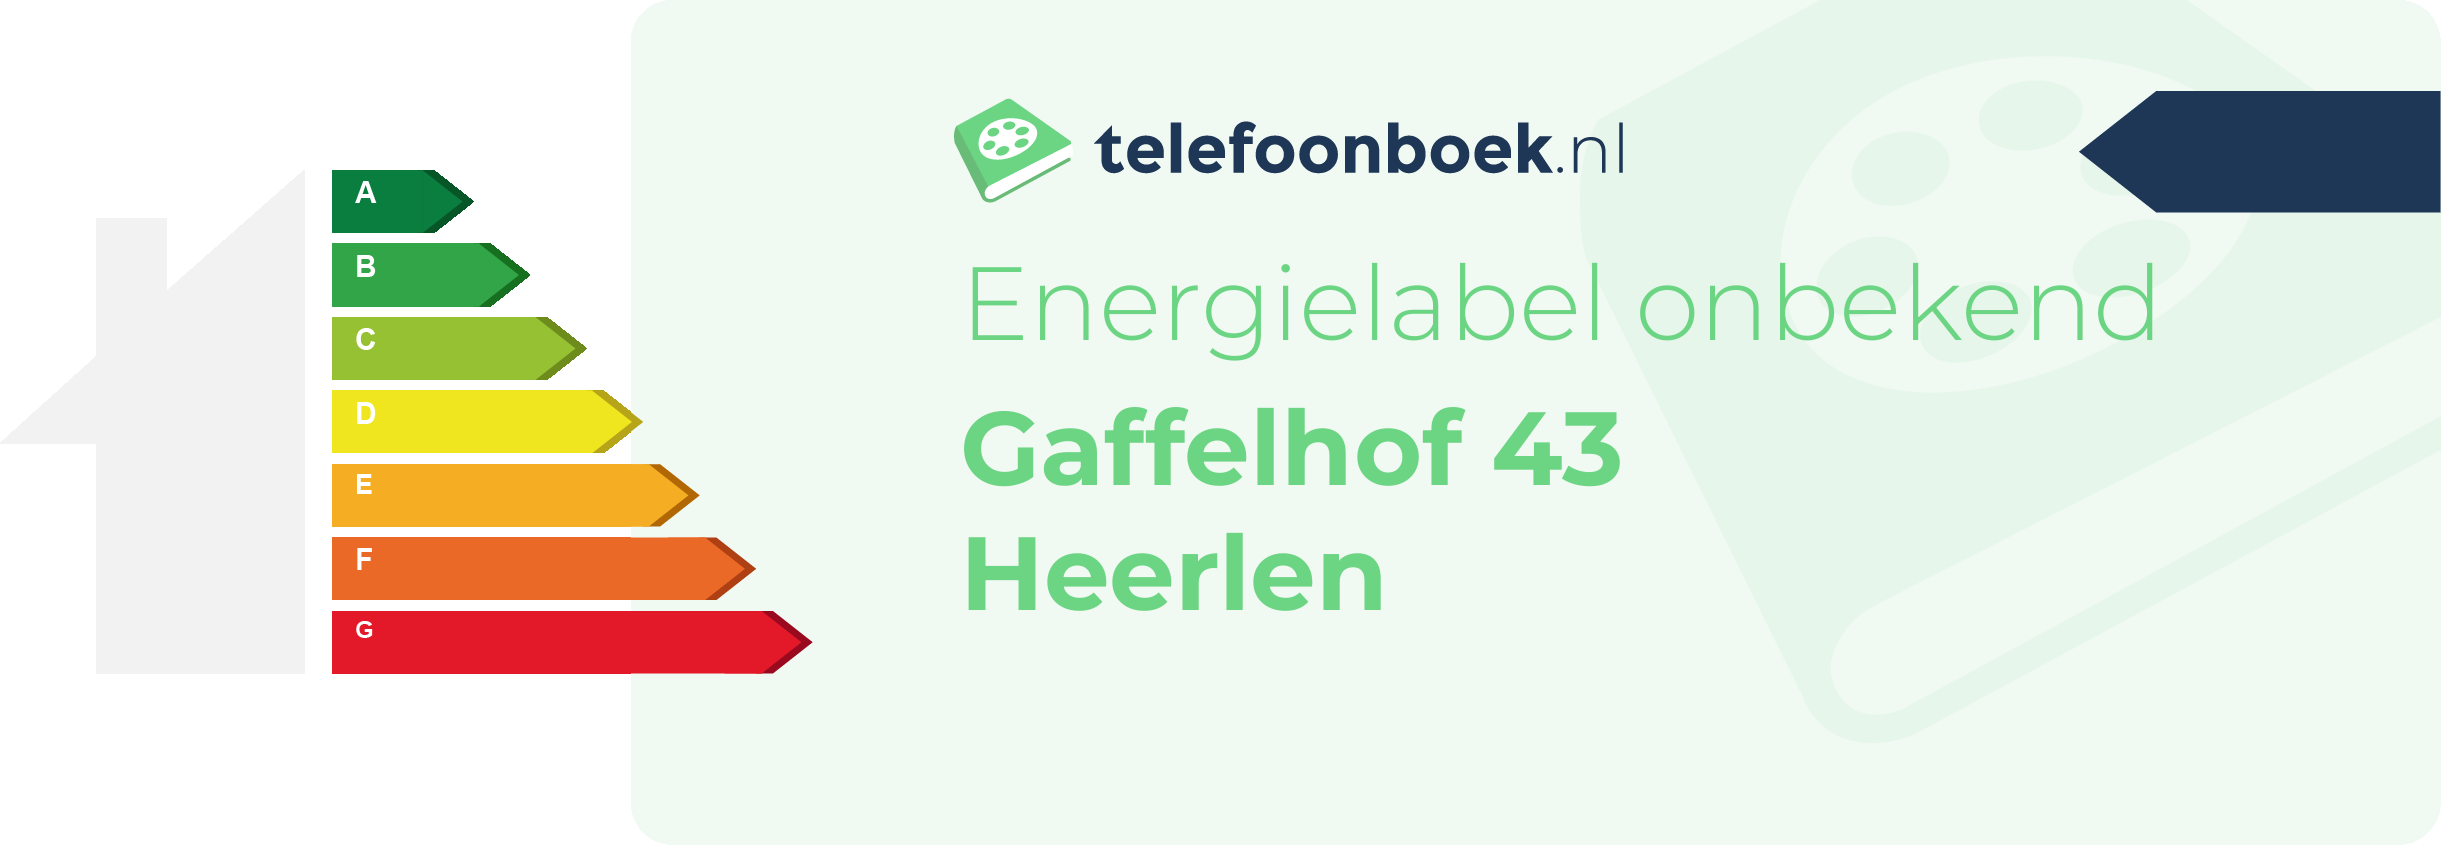 Energielabel Gaffelhof 43 Heerlen